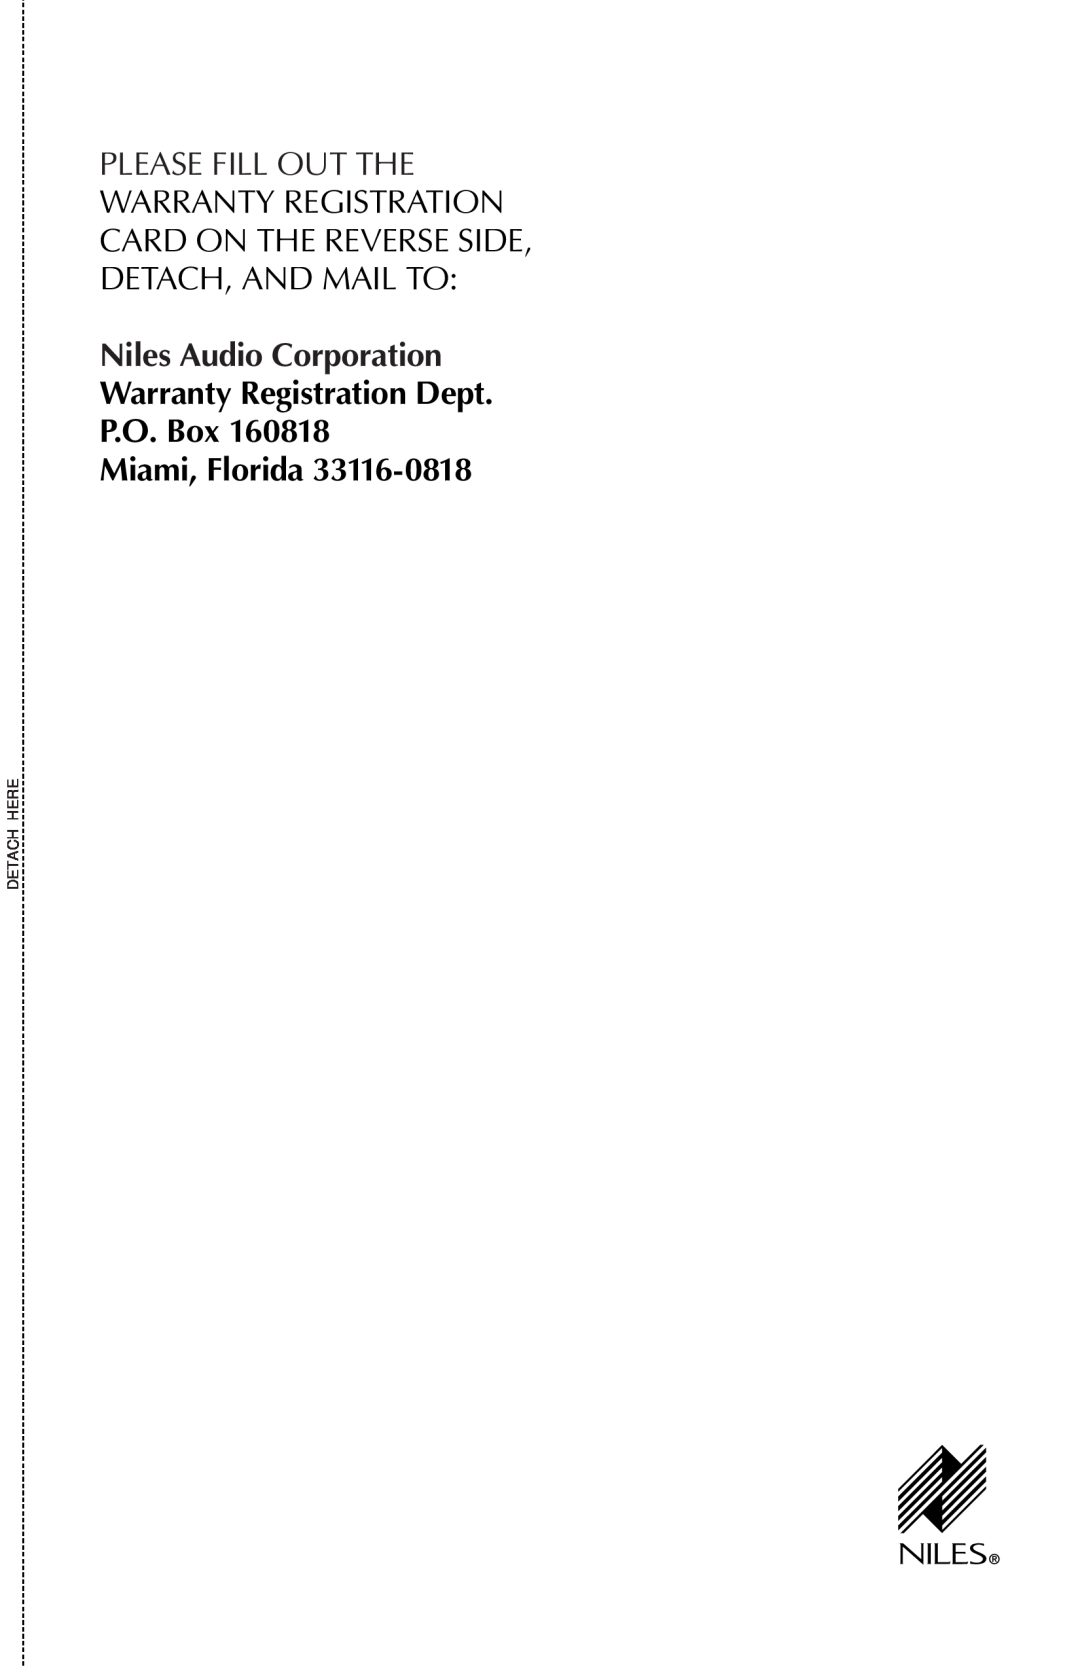 Niles Audio MP5, MP6 manual Niles Audio Corporation, Warranty Registration Dept P.O. Box, Miami, Florida, Detach Here 